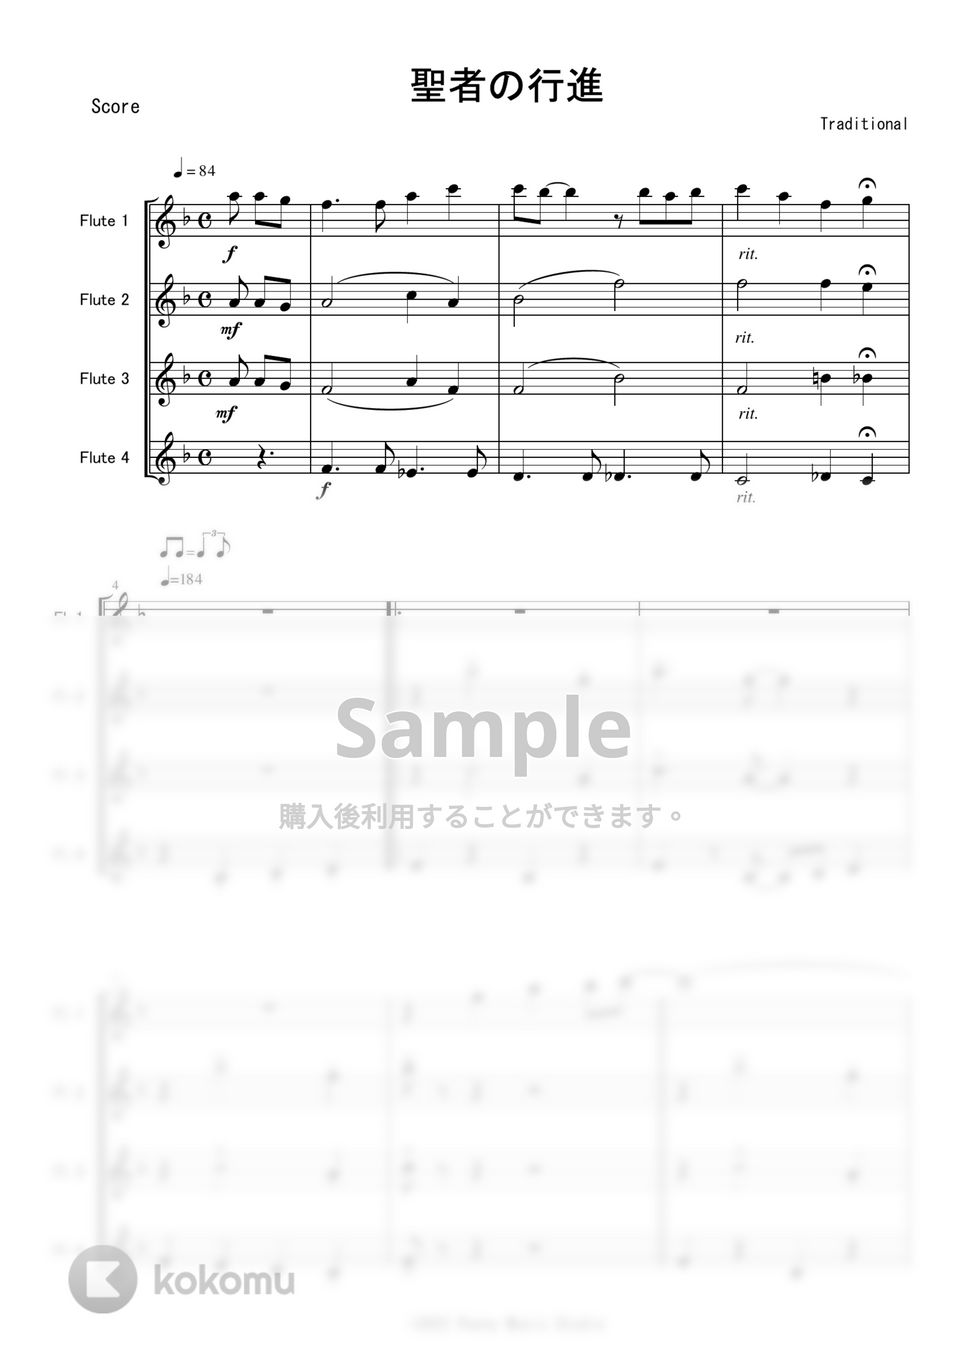 Traditional - 聖者の行進 (フルート四重奏) by Peony